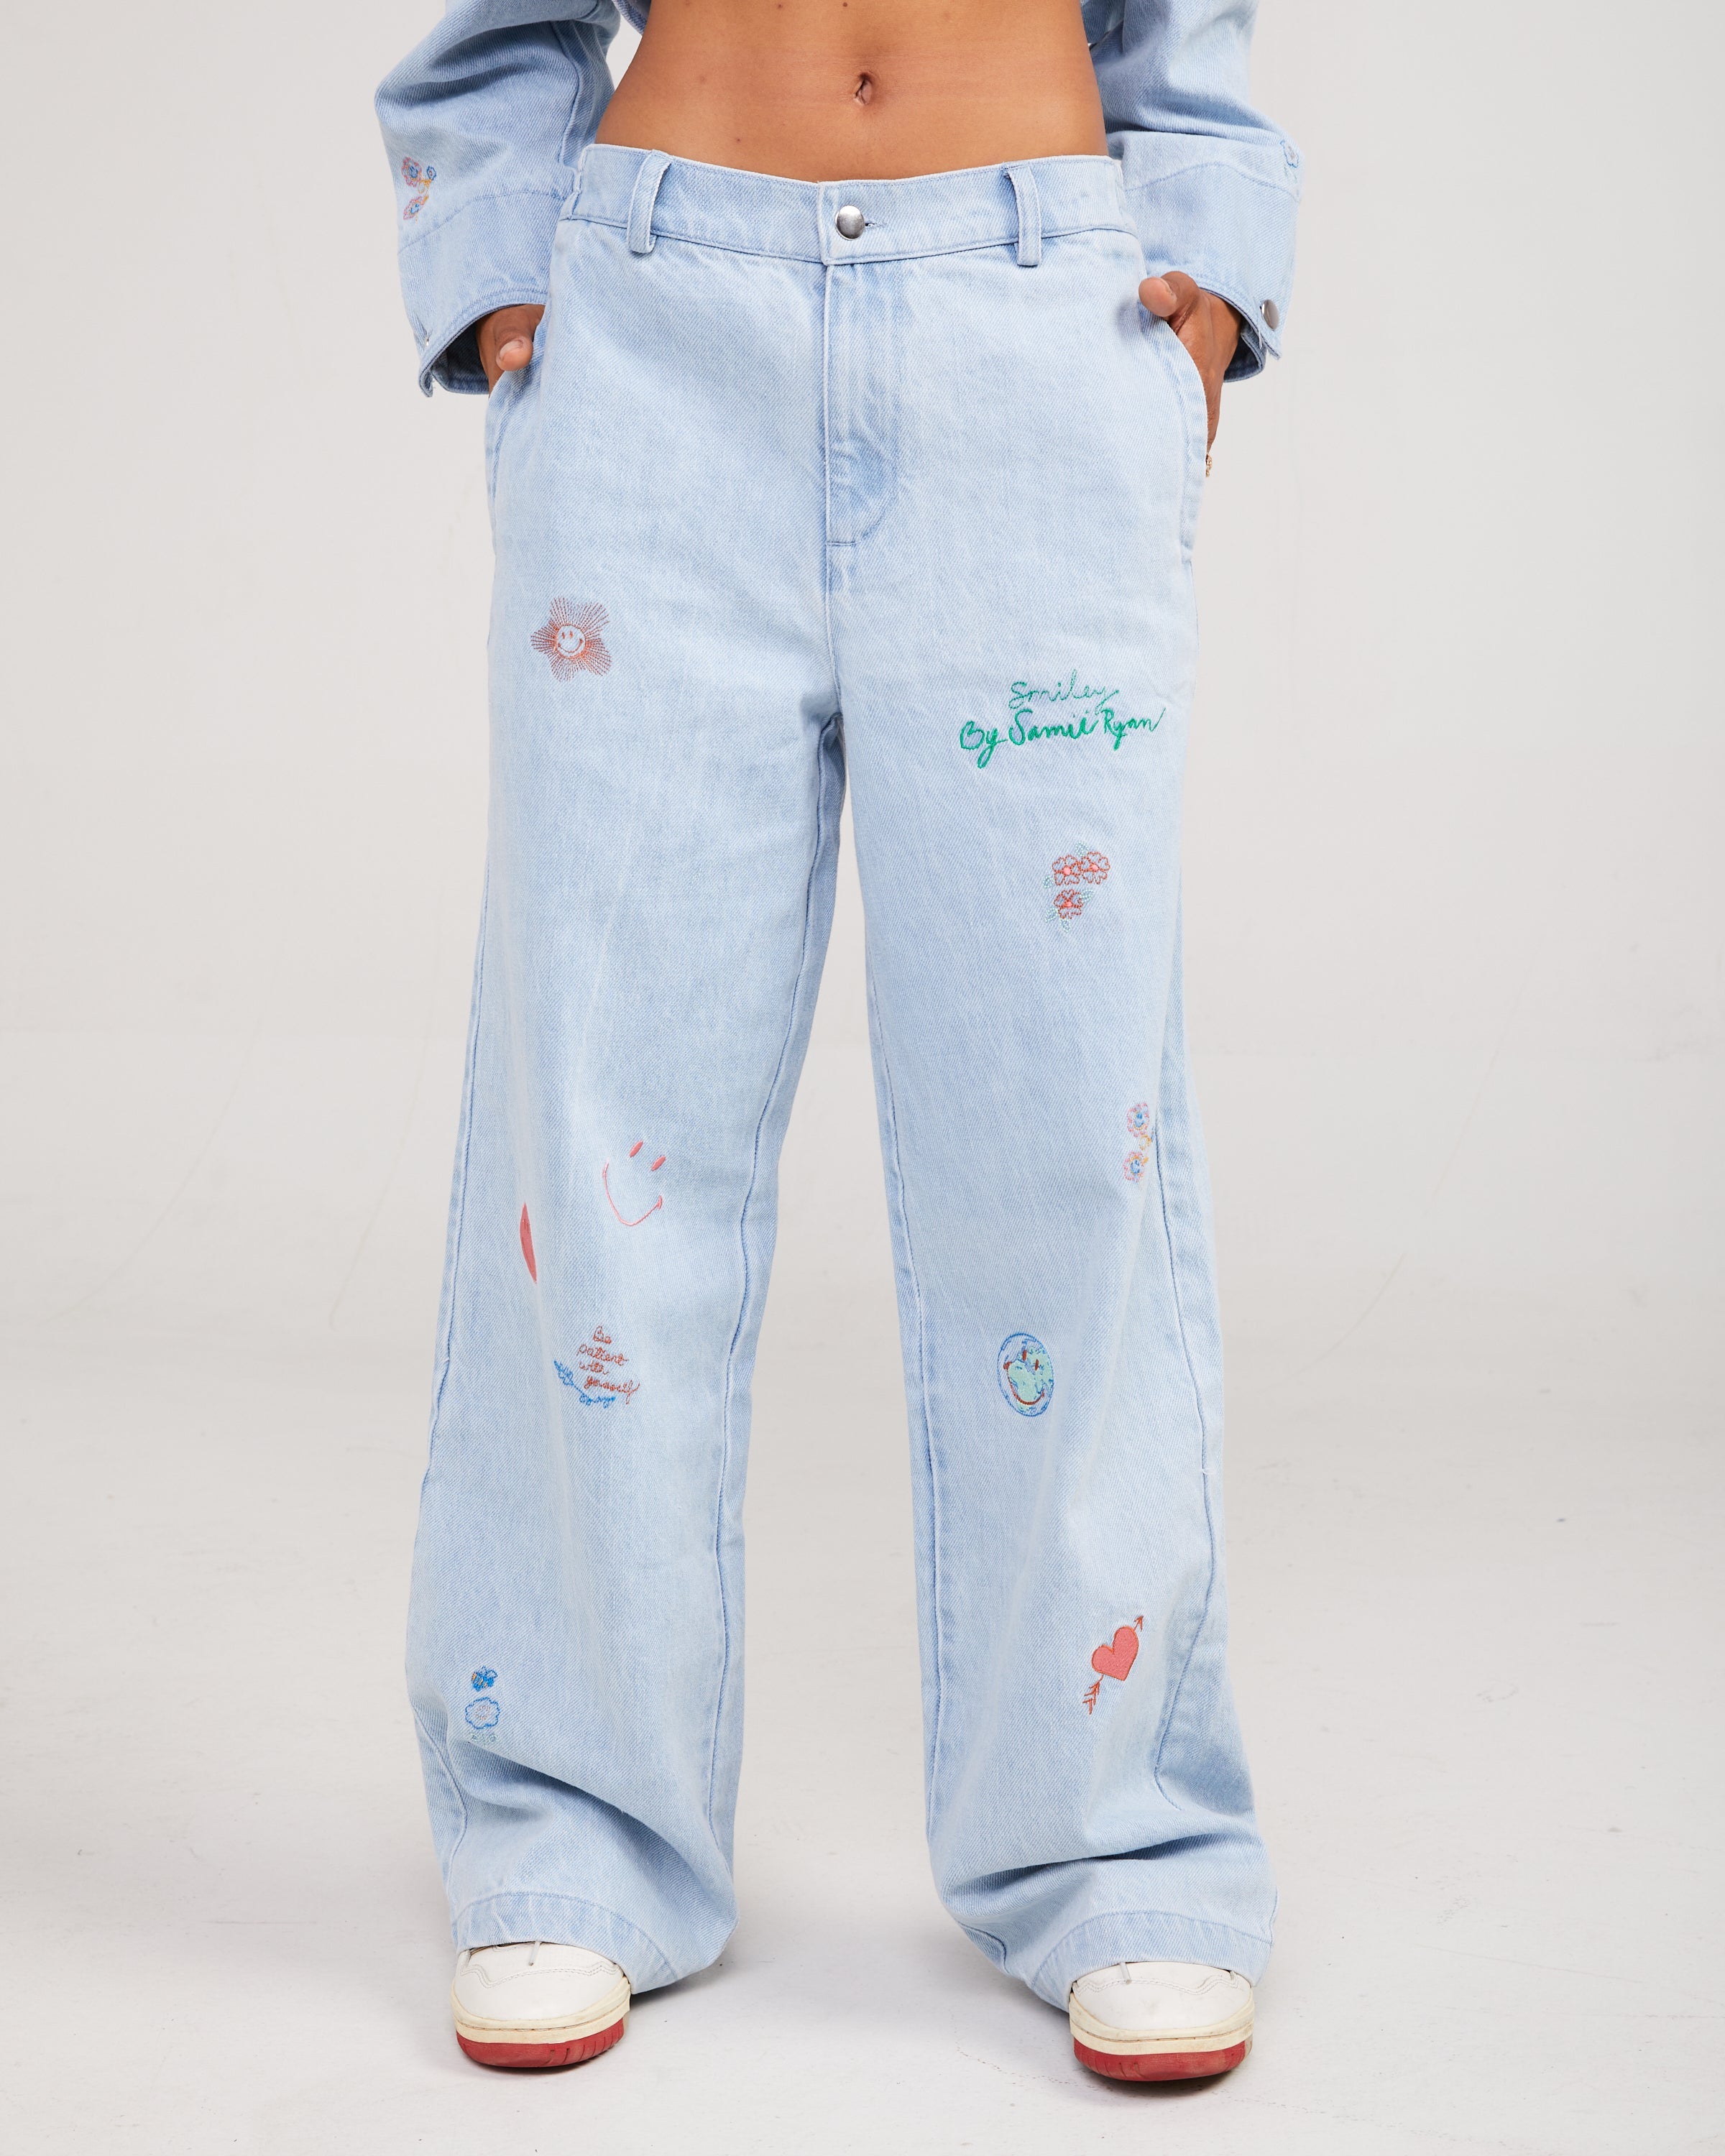 Women's Jeans – Smiley